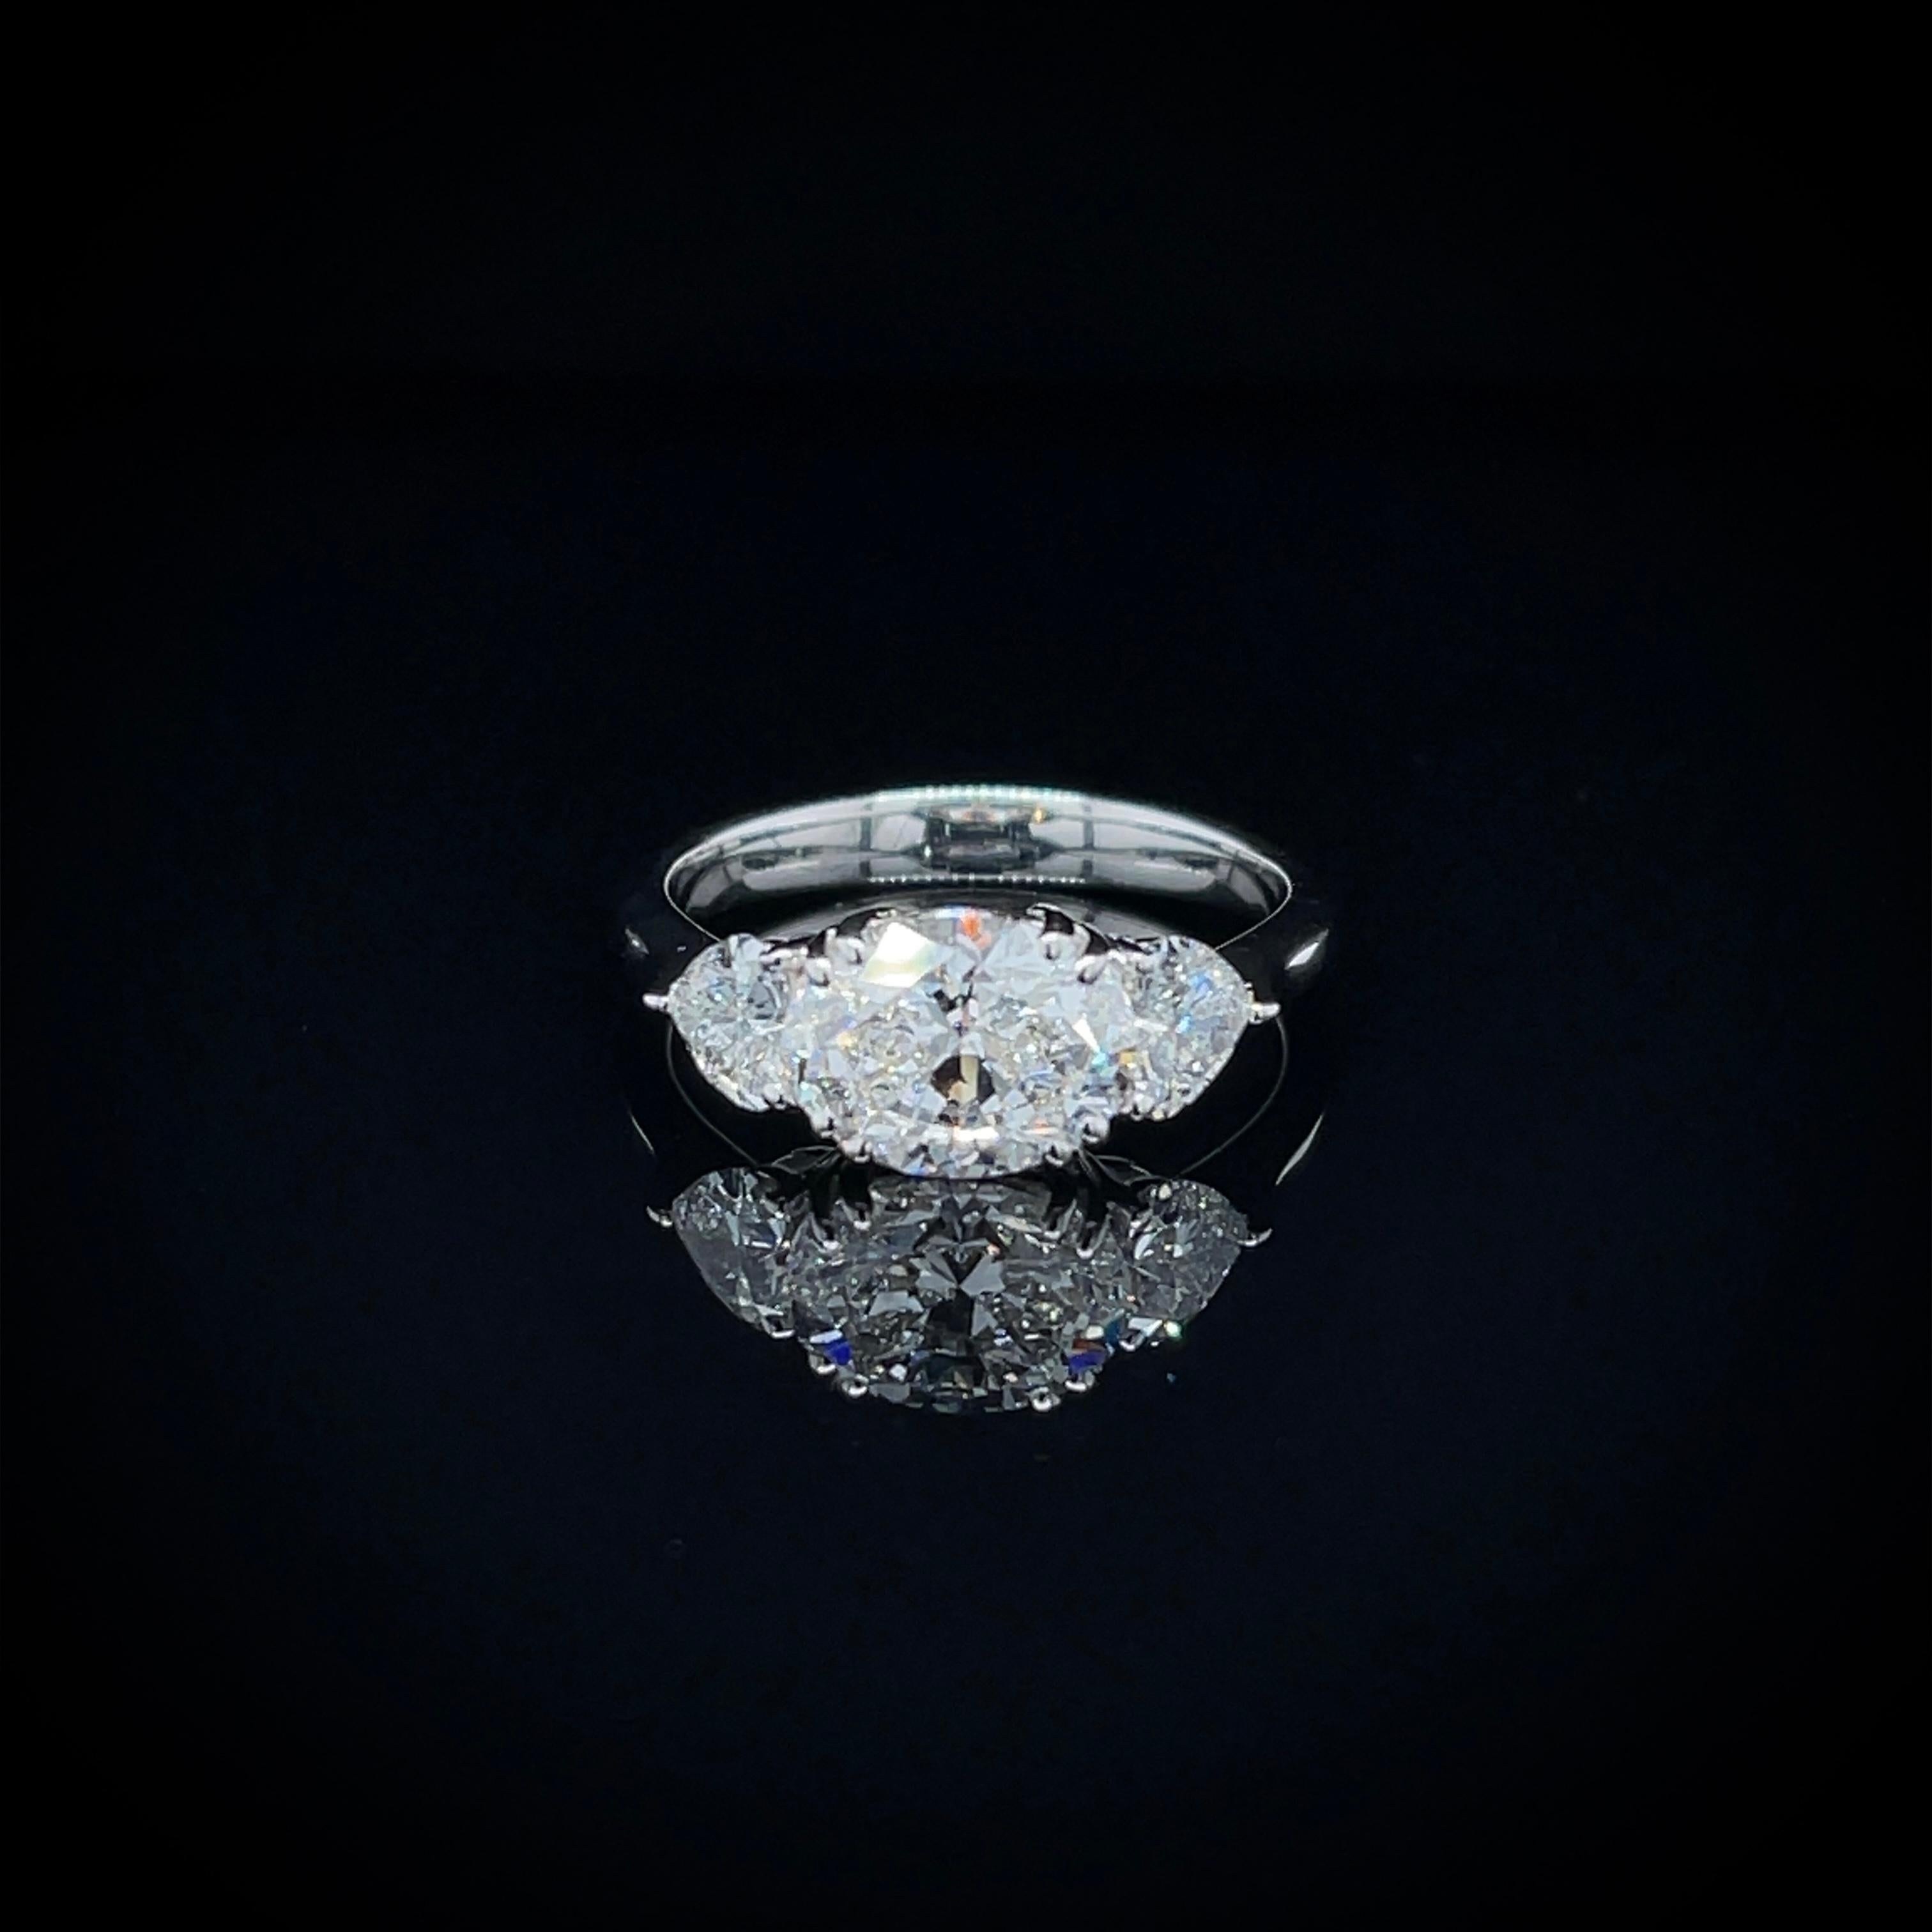 GIA Certified Oval Cut 2.02 Carat F VS1 Diamond Ring in 18K White Gold For Sale 2